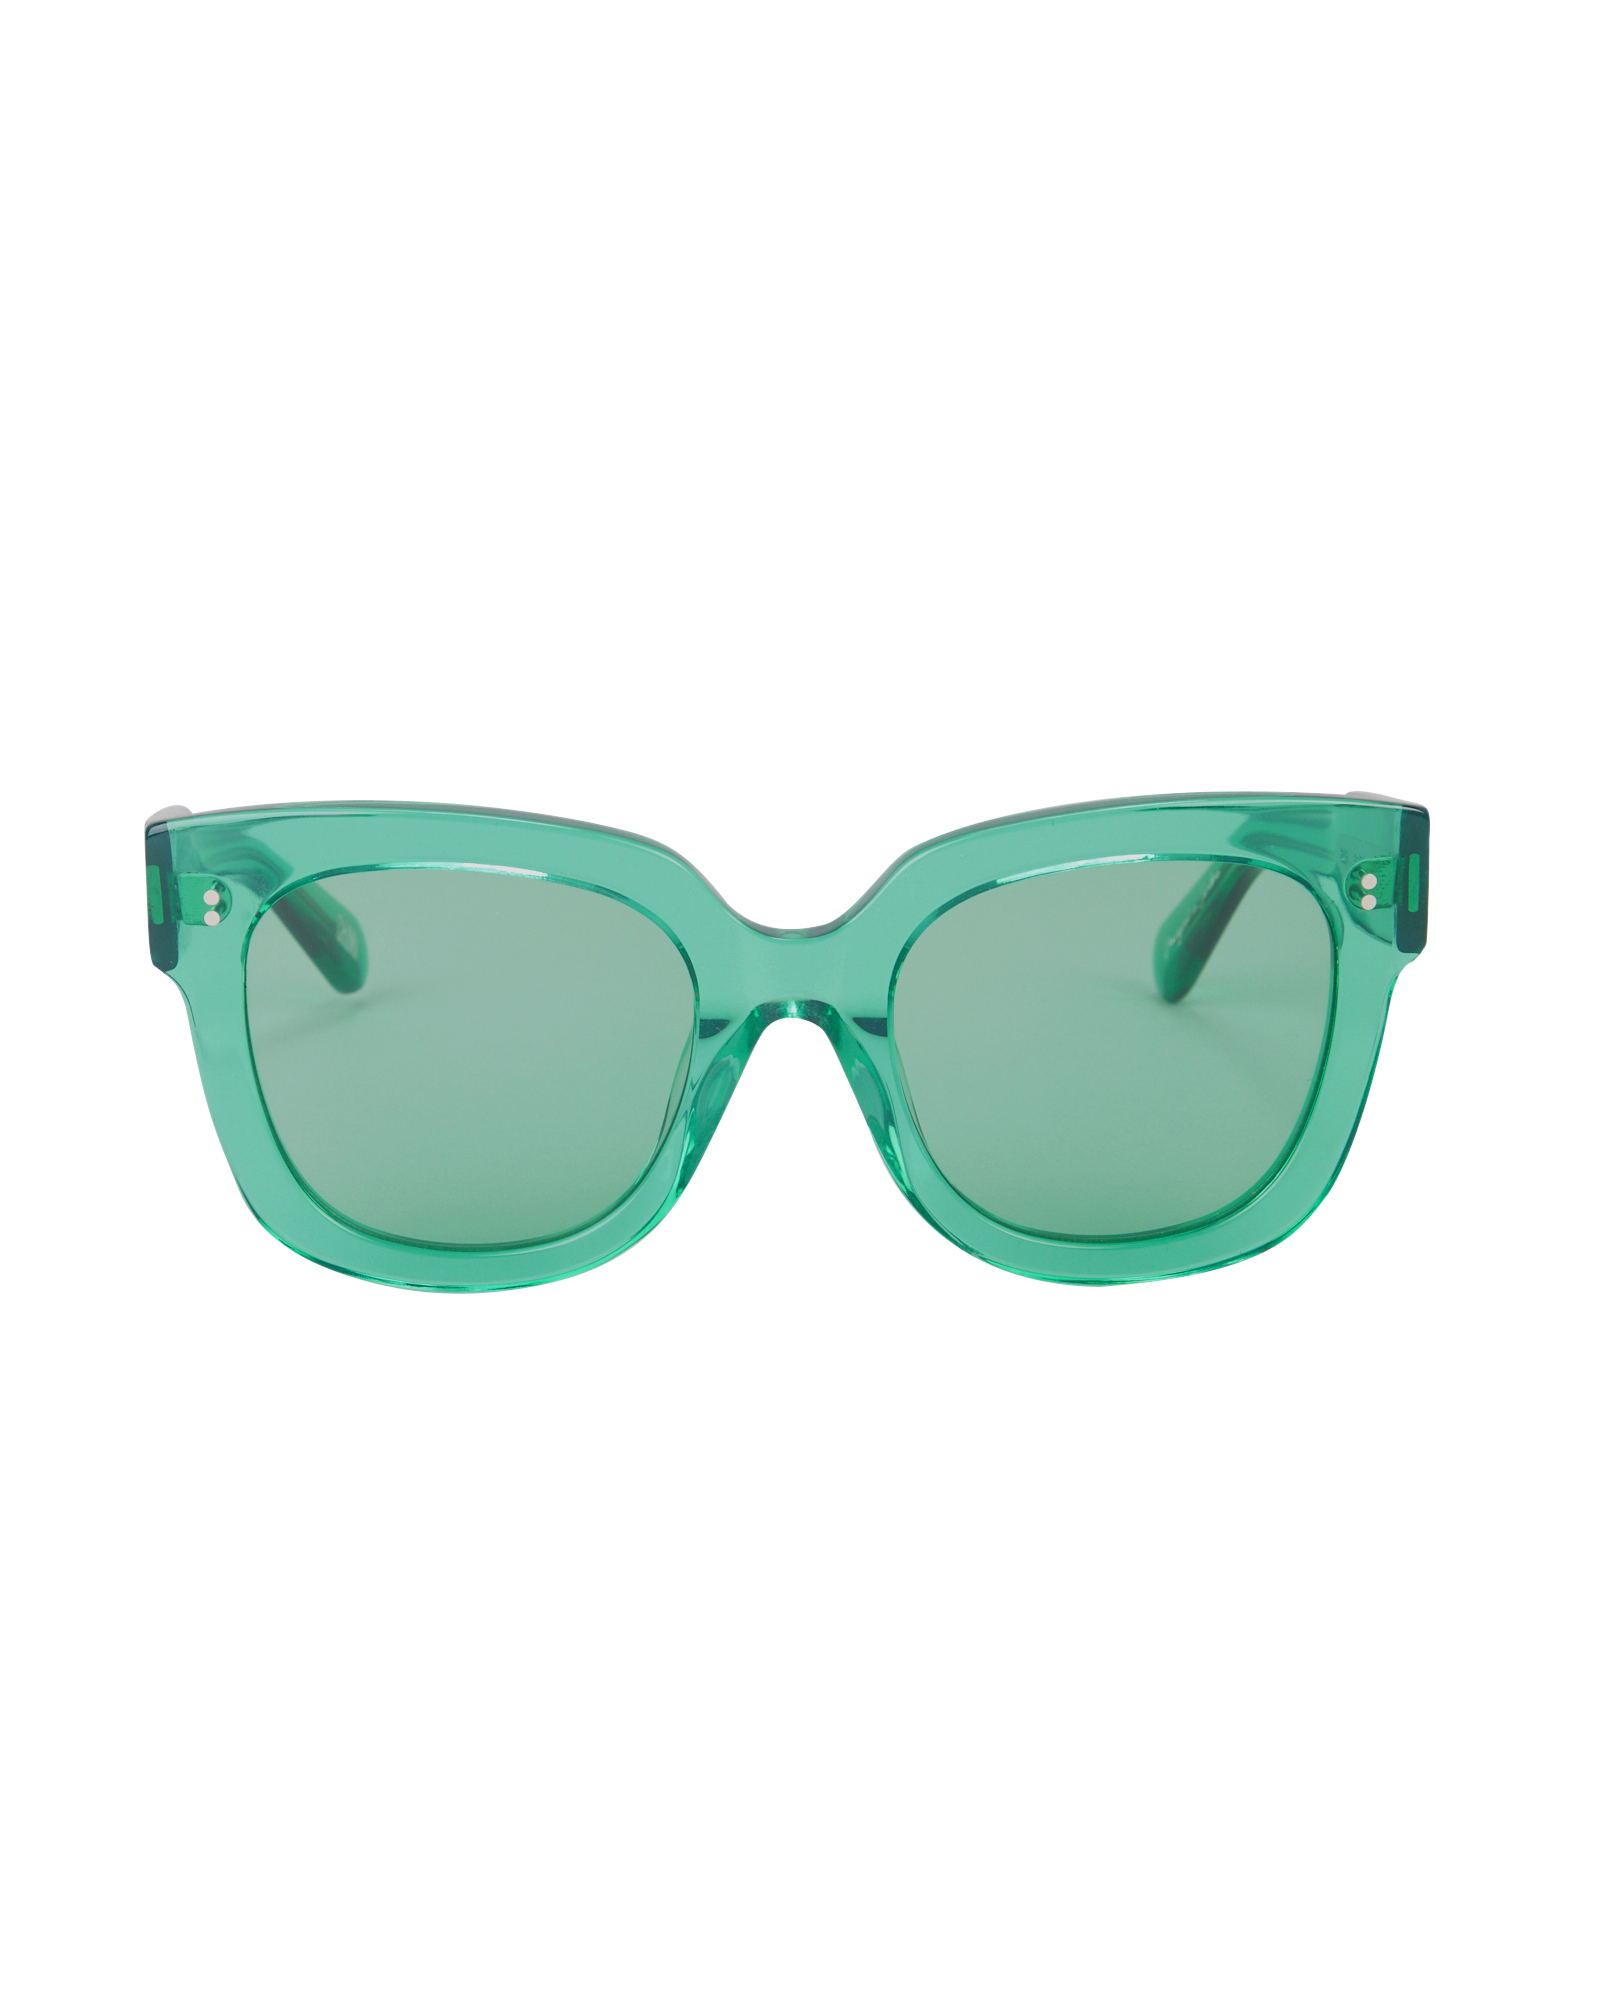 #008 Aqua Clear Lens Sunglasses